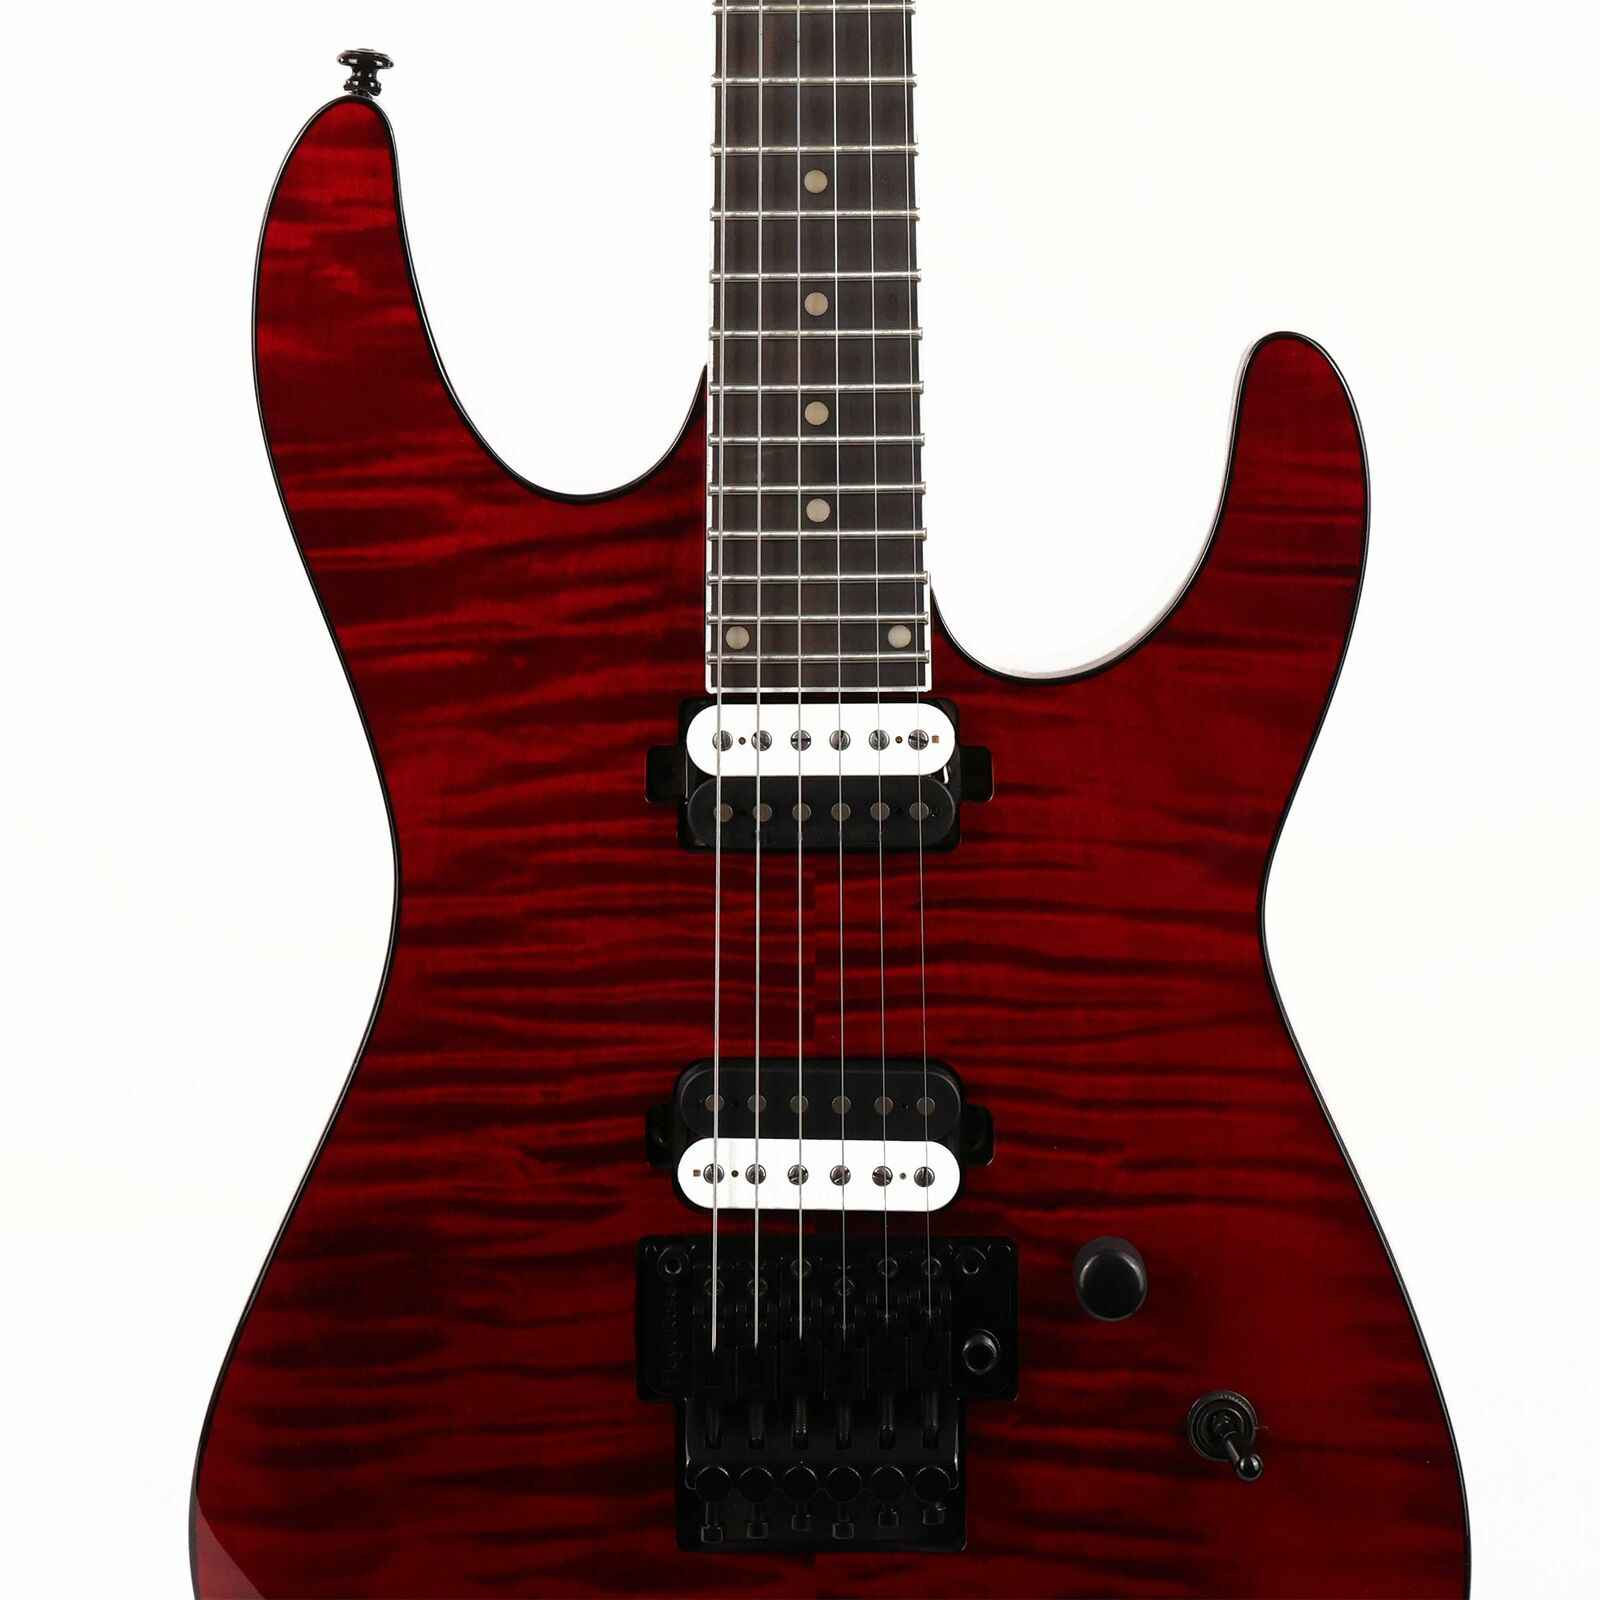 Dea n Md 24 Select Flame Floyd透明なチェリーエレクトリックギターと同じように写真